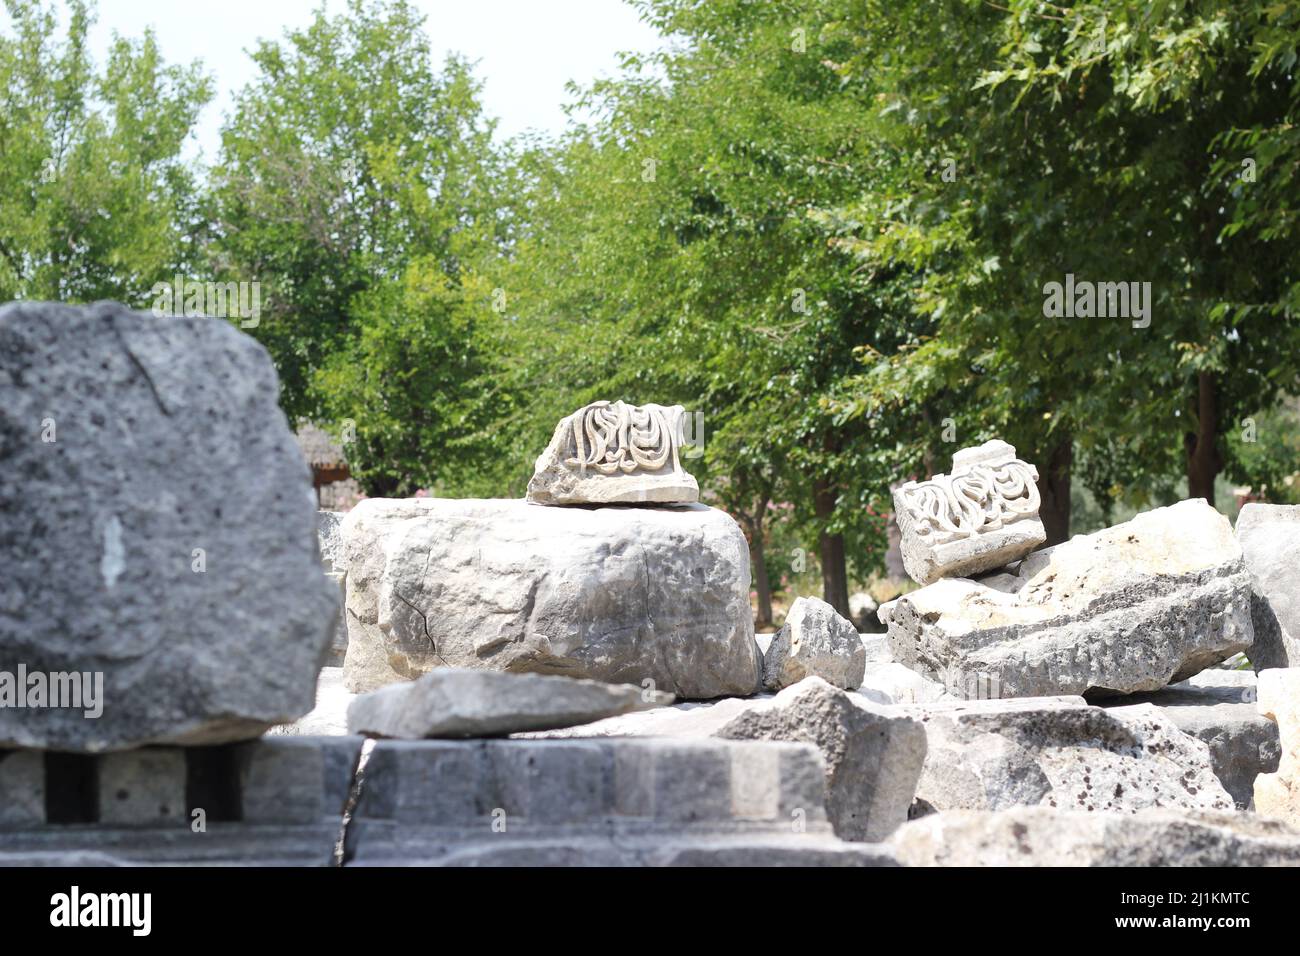 Antalya,Turkey- July 03 2021: Antalya Perge Ancient City as known as “Perge Antik Kenti” with broken ancient stones Stock Photo